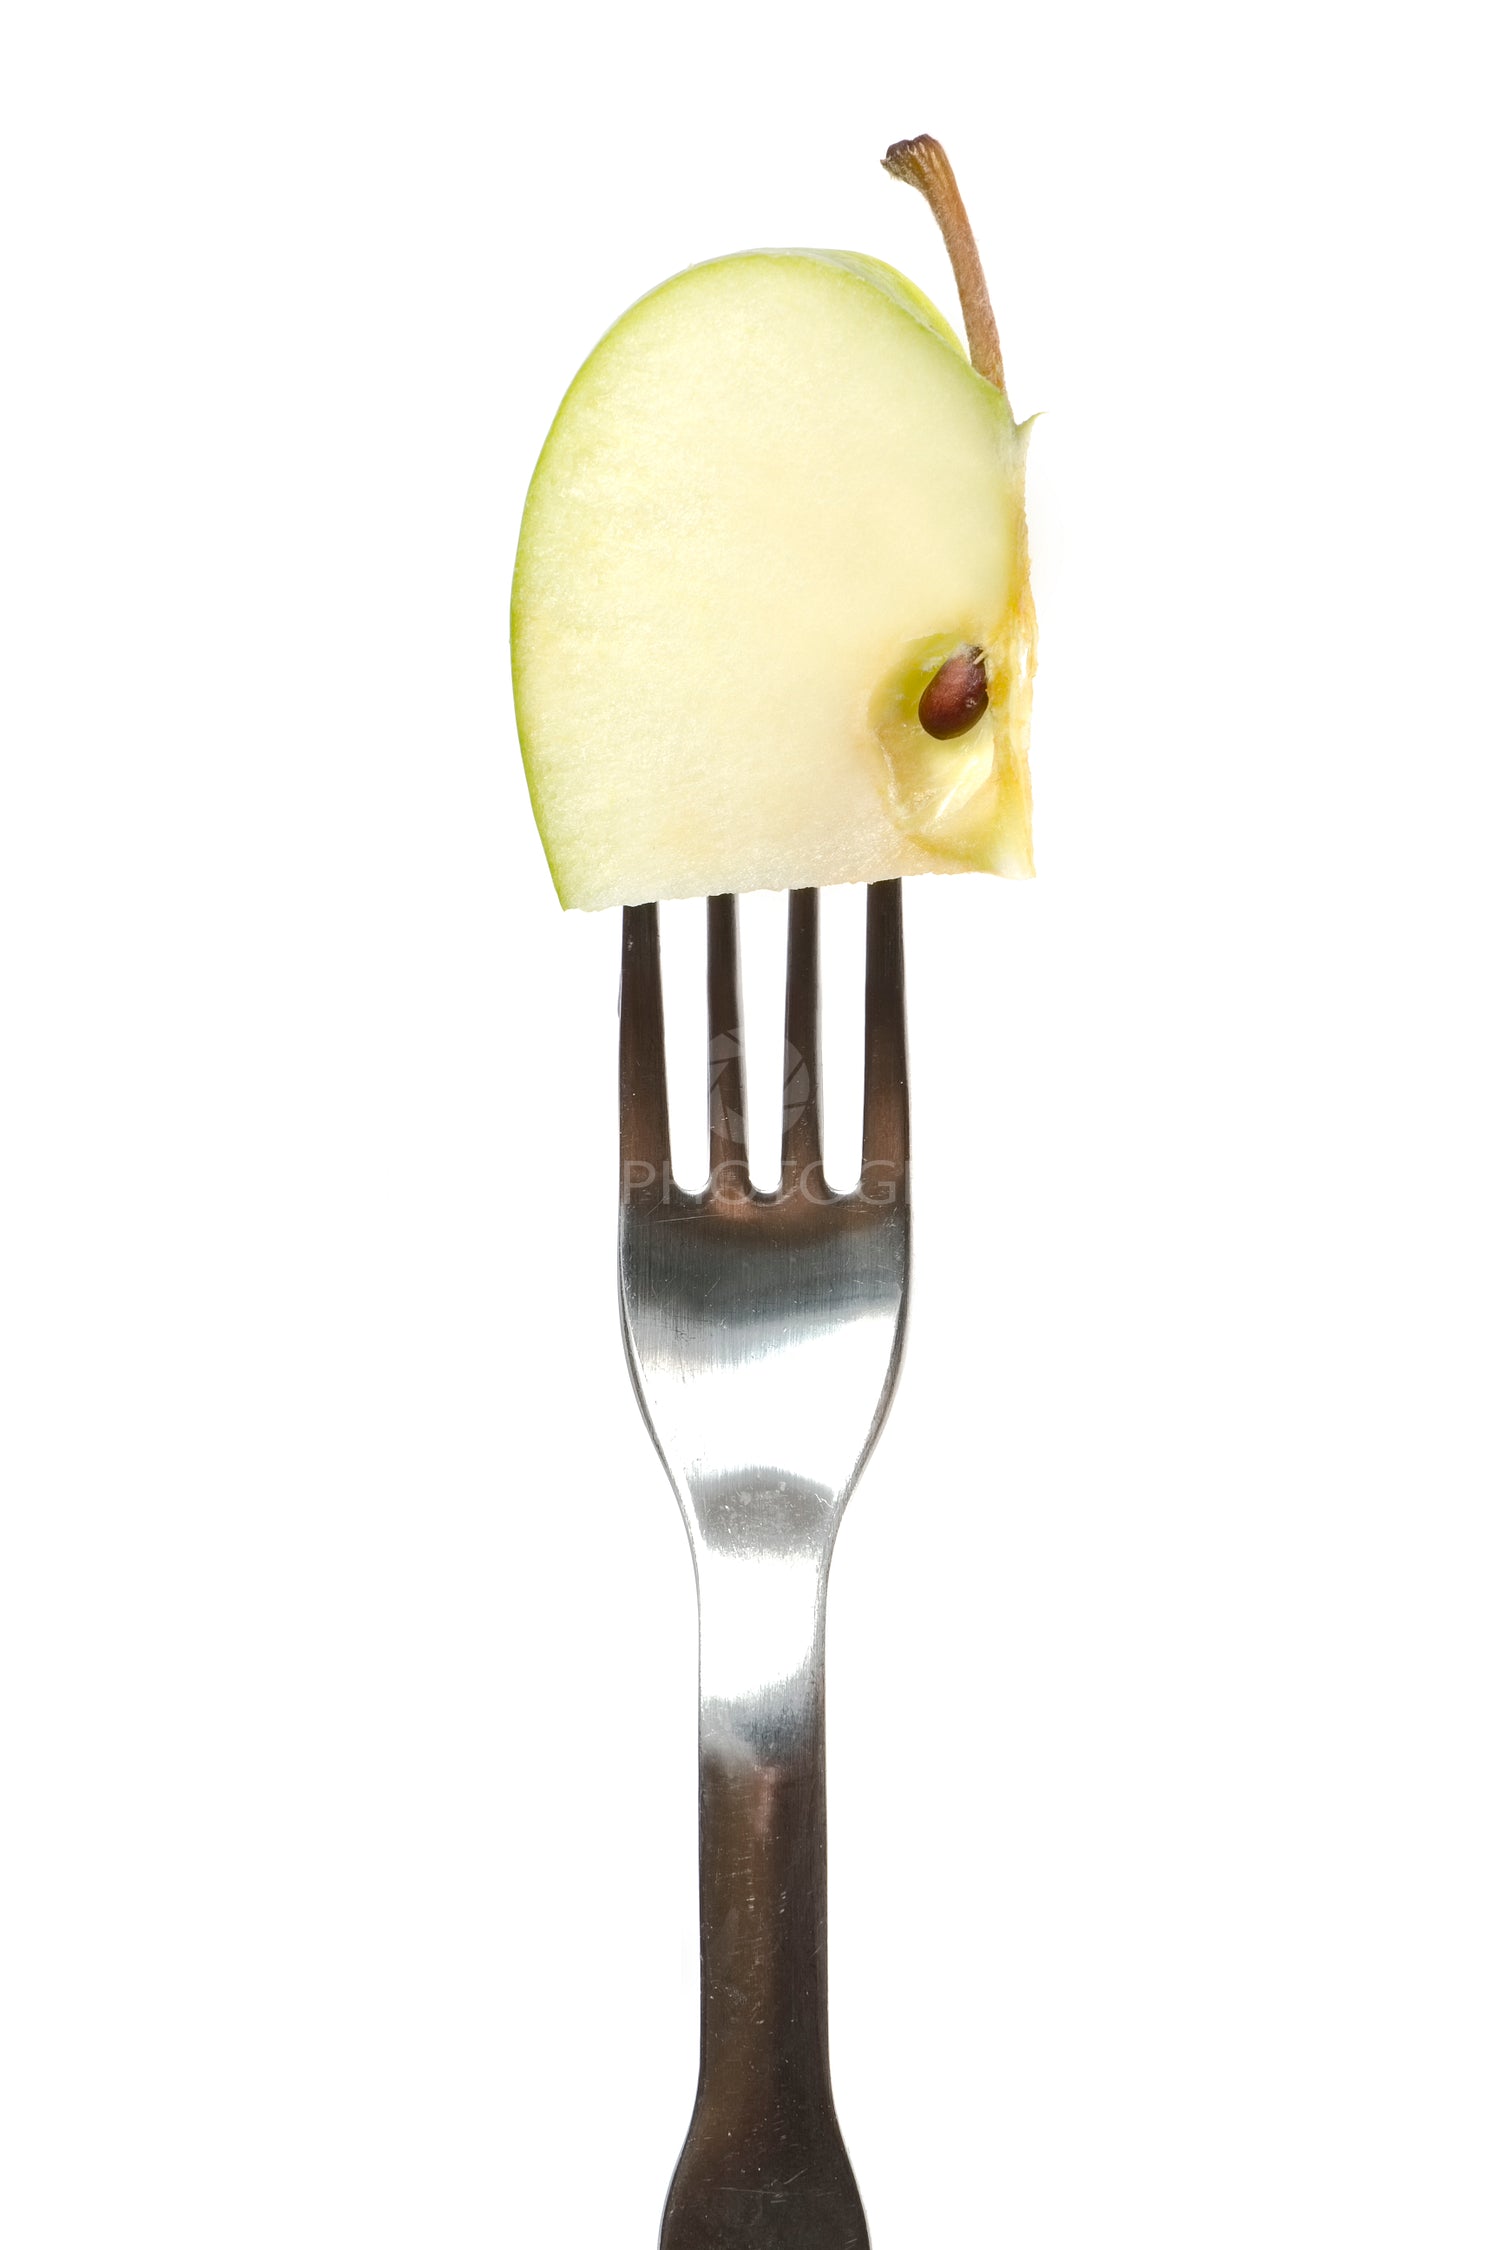 Organic Green Apple